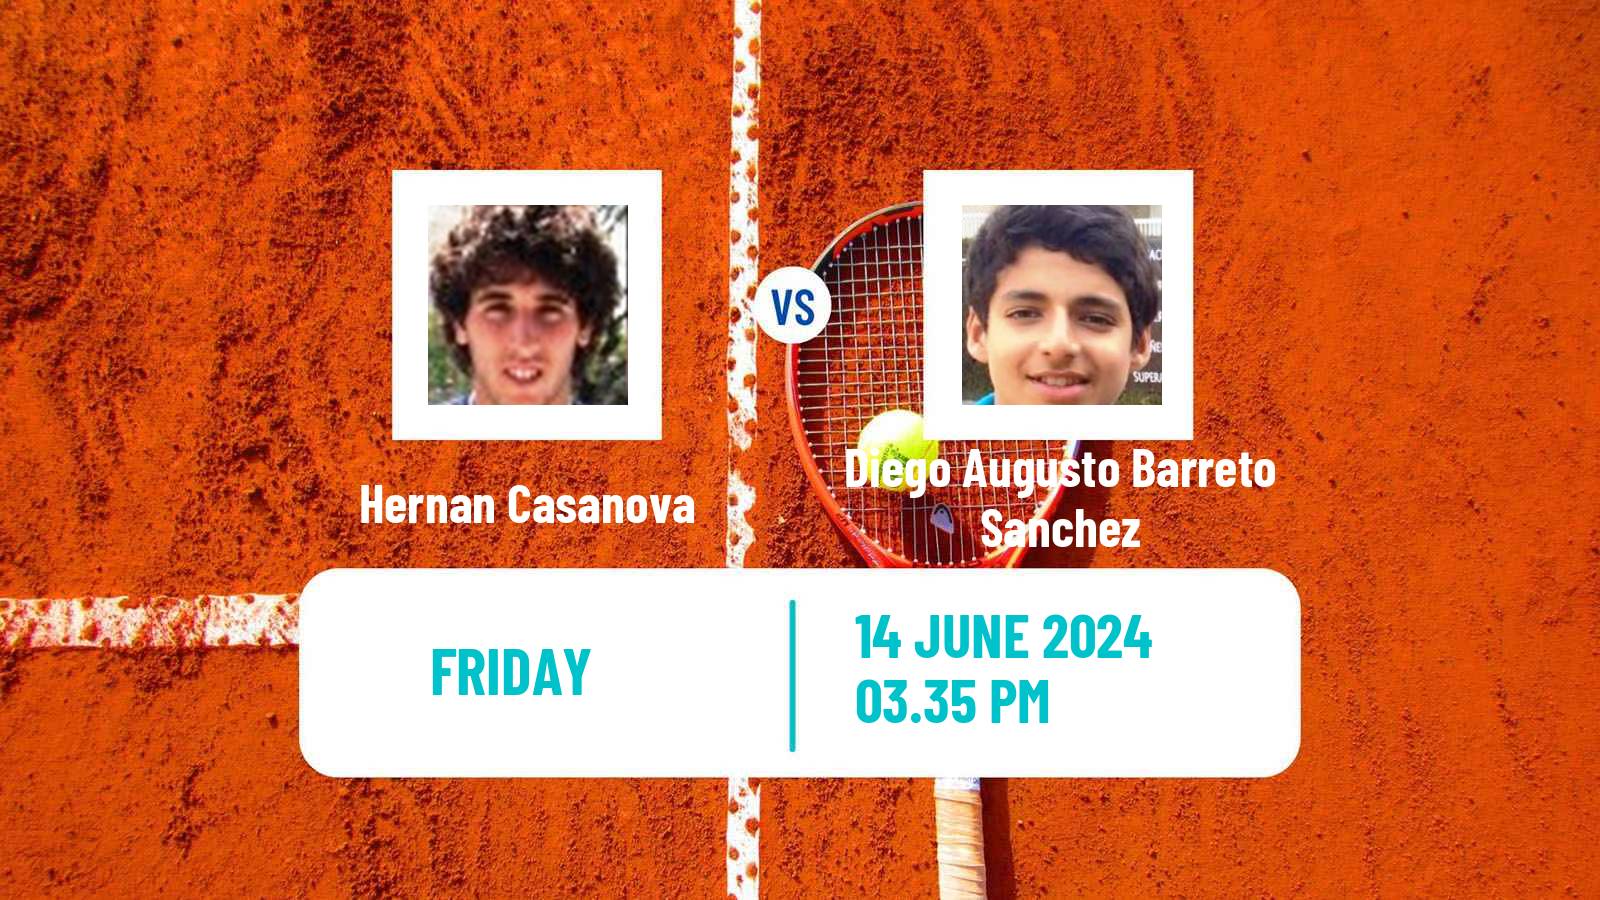 Tennis Lima Challenger Men Hernan Casanova - Diego Augusto Barreto Sanchez